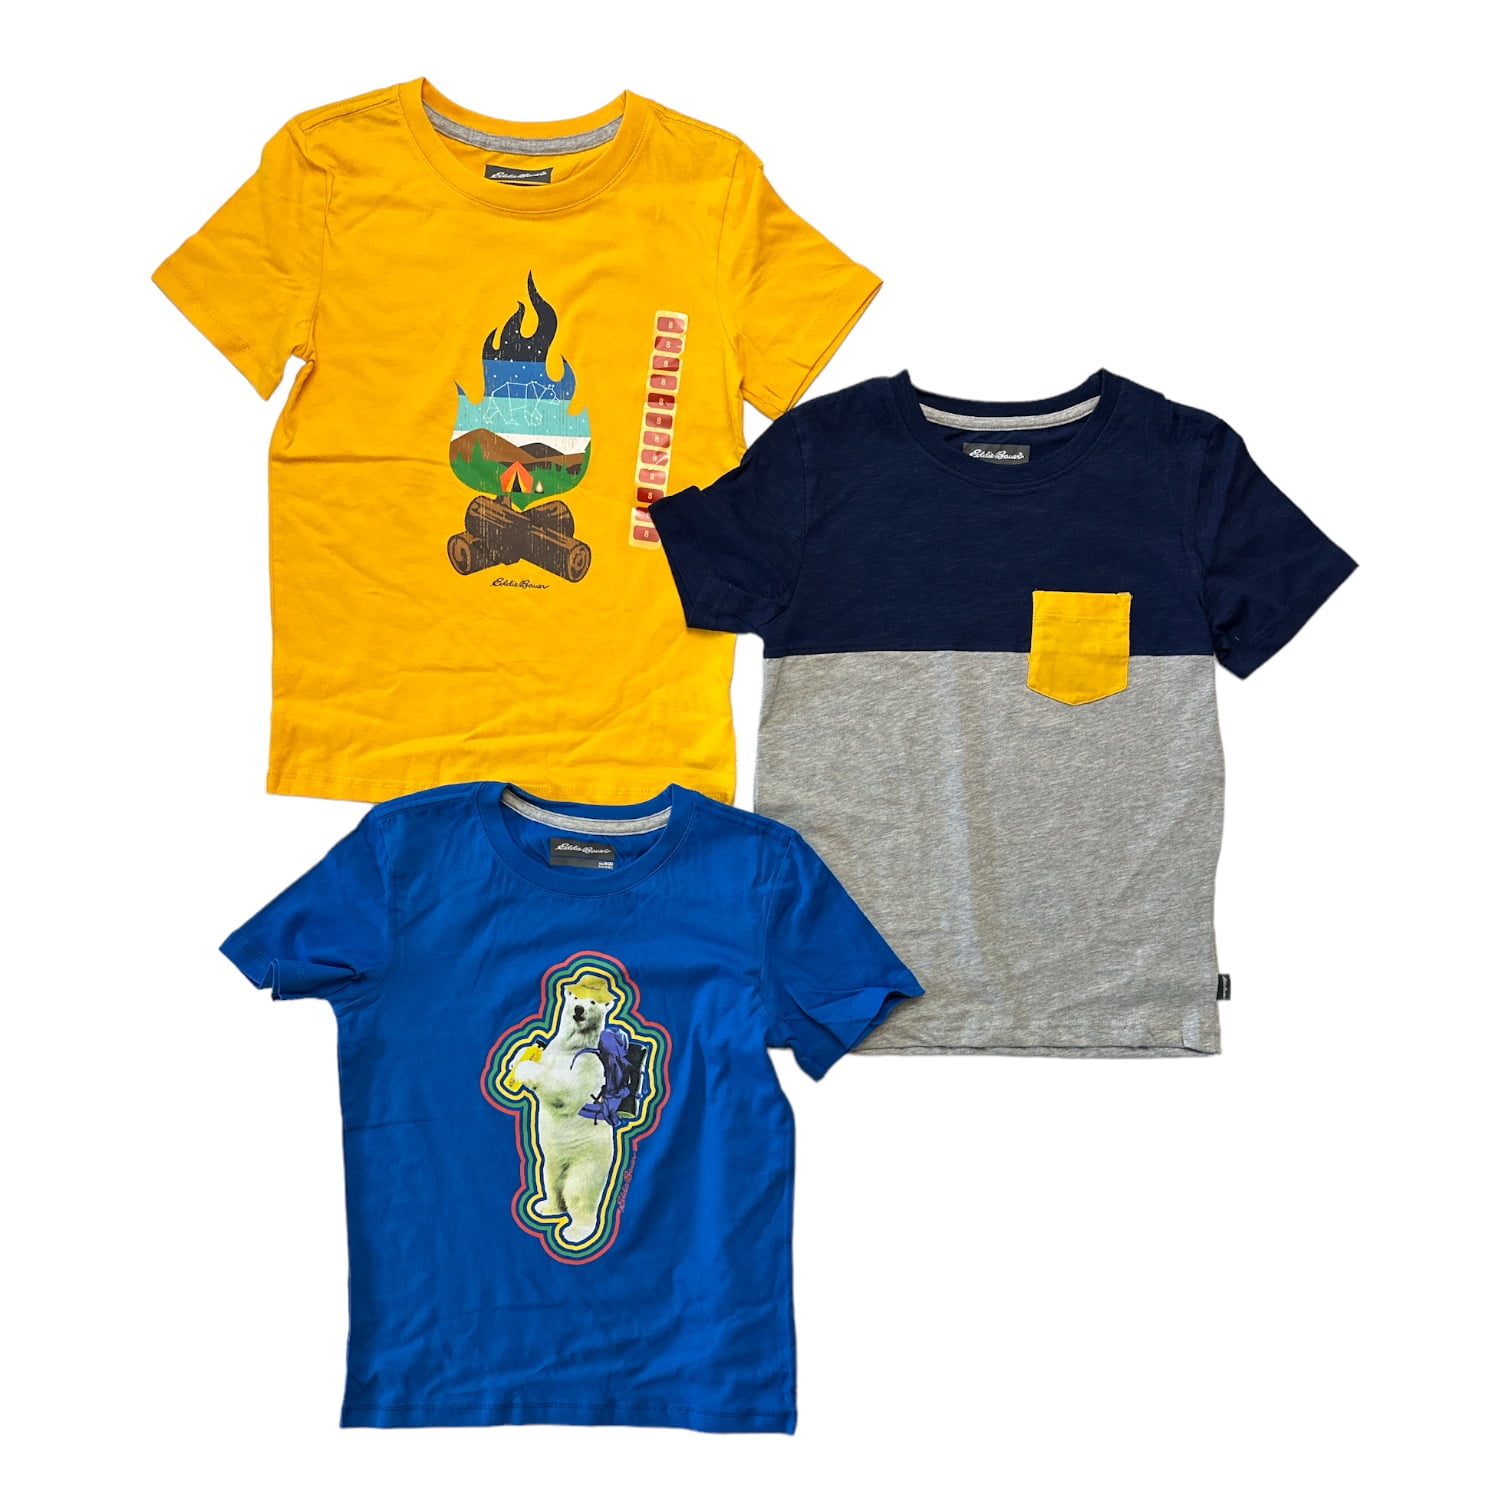 Eddie Bauer Boy's 3-Pack Graphic Print Crewneck Short Sleeve T-Shirts (Yellow/Blue/Grey, S (6/7)) Walmart.com